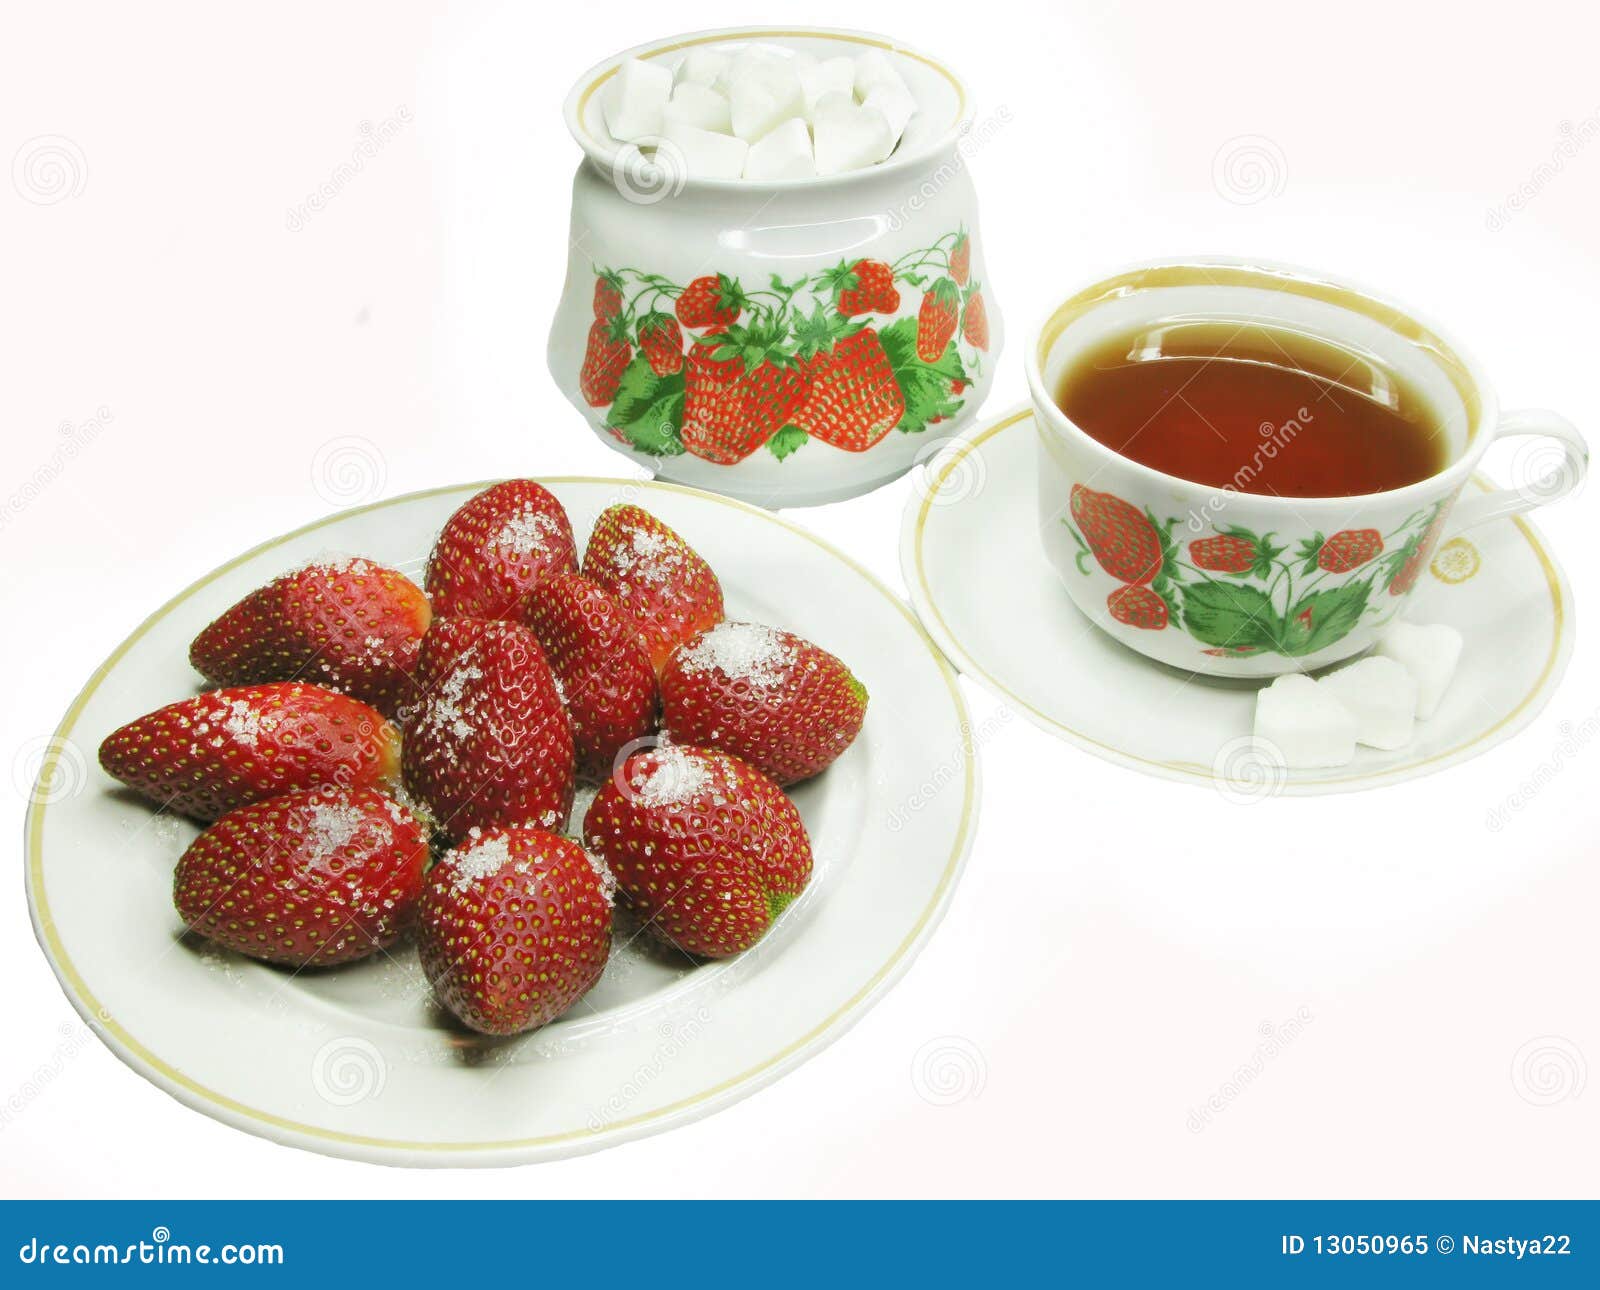 strawberry tea clipart - photo #41